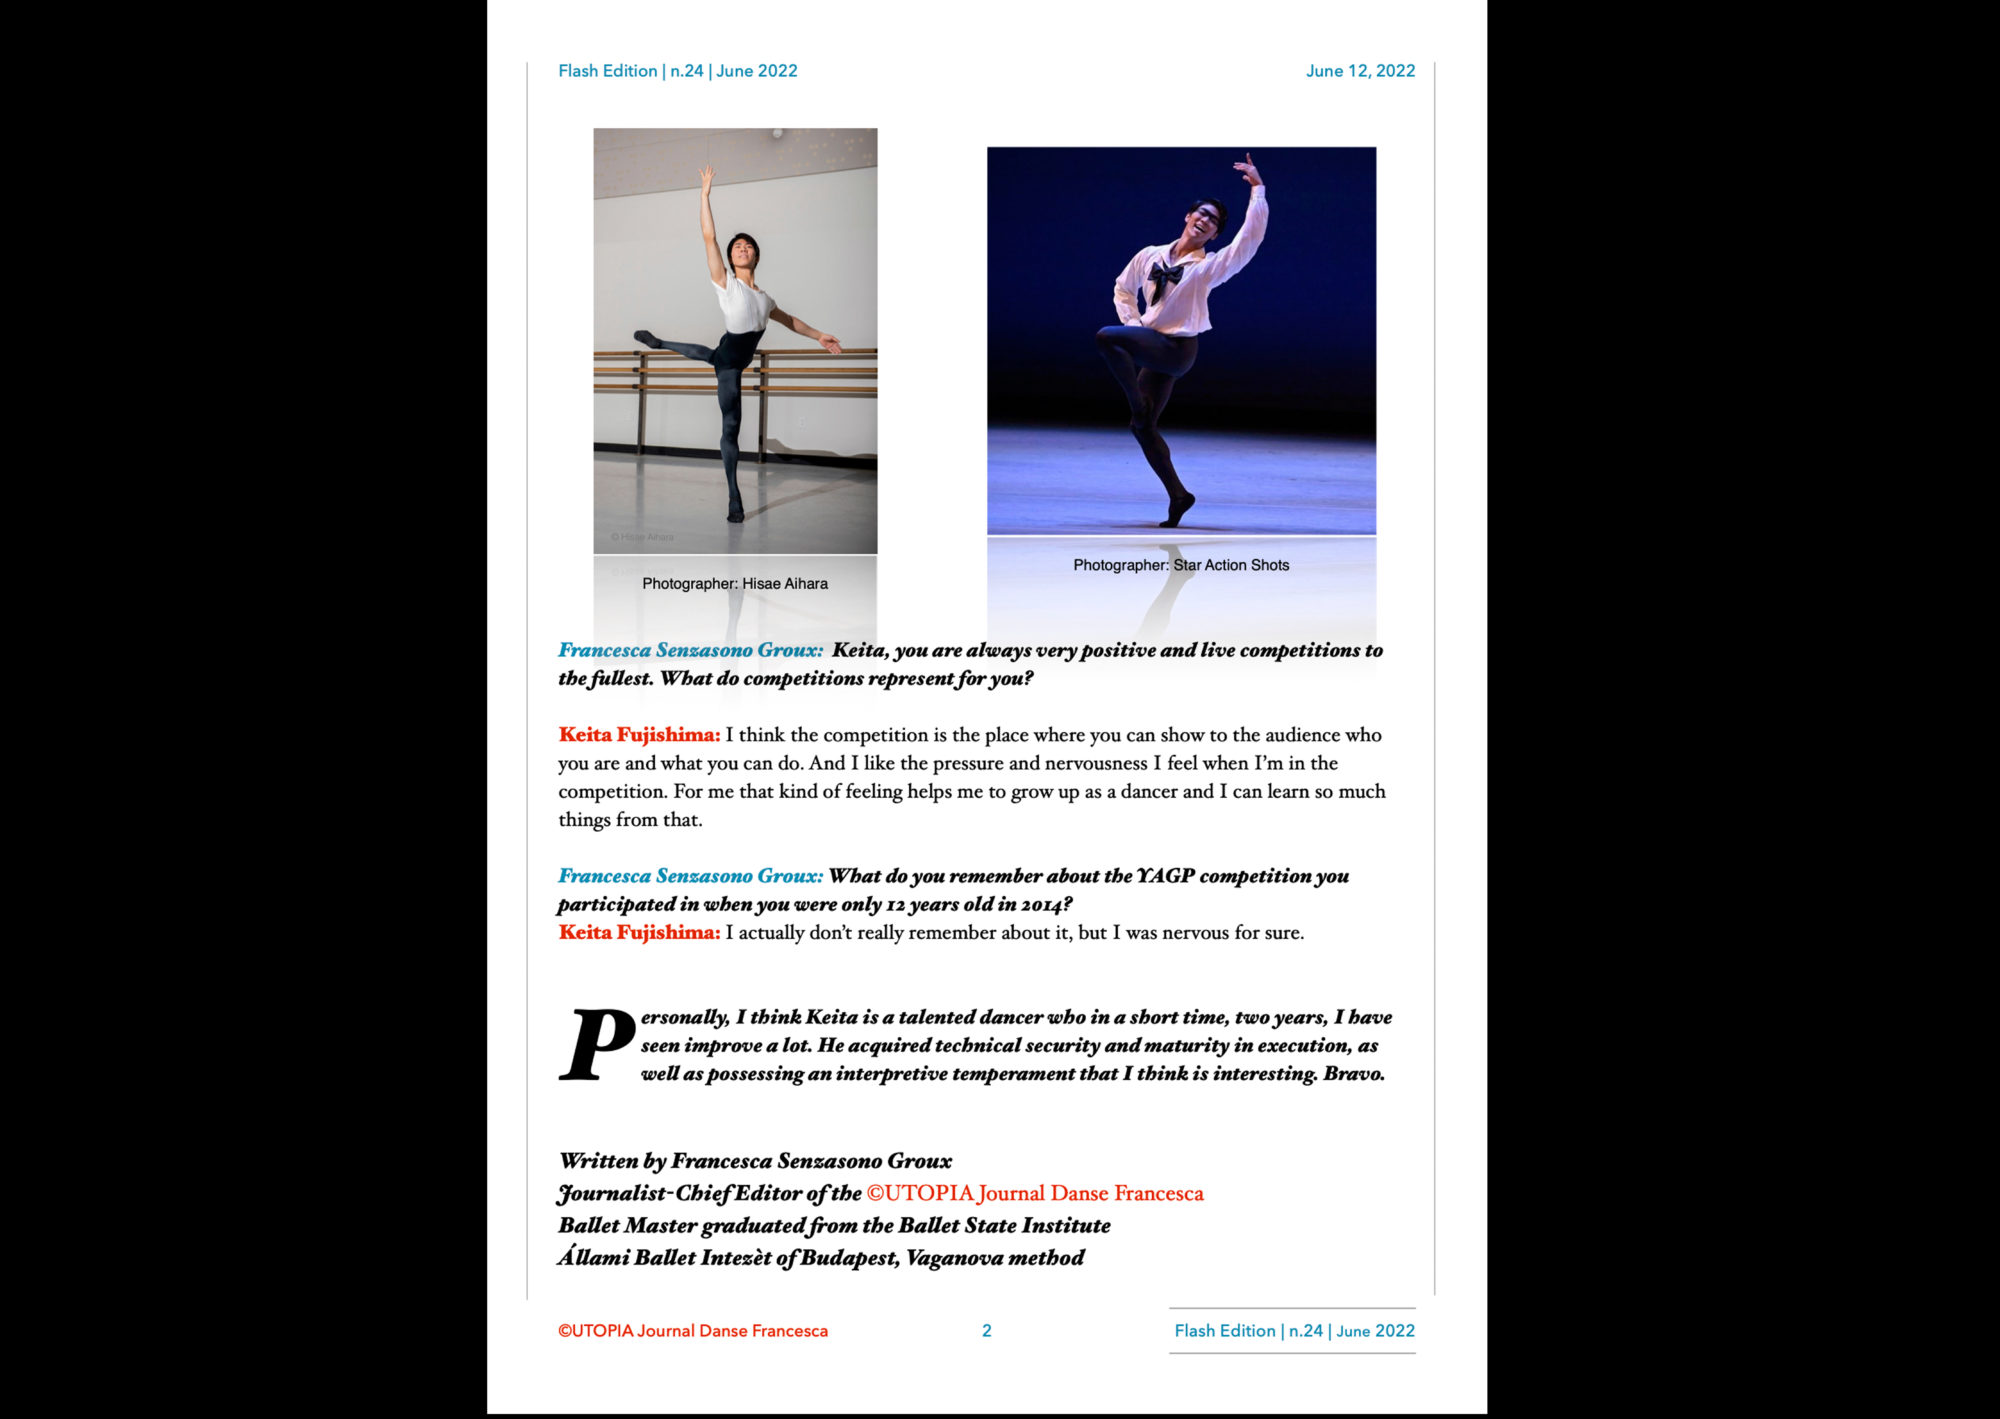 ©UTOPIA Journal Danse Francecsa Extraordinary Flash Edition n.24 June 11, 2022 page 2